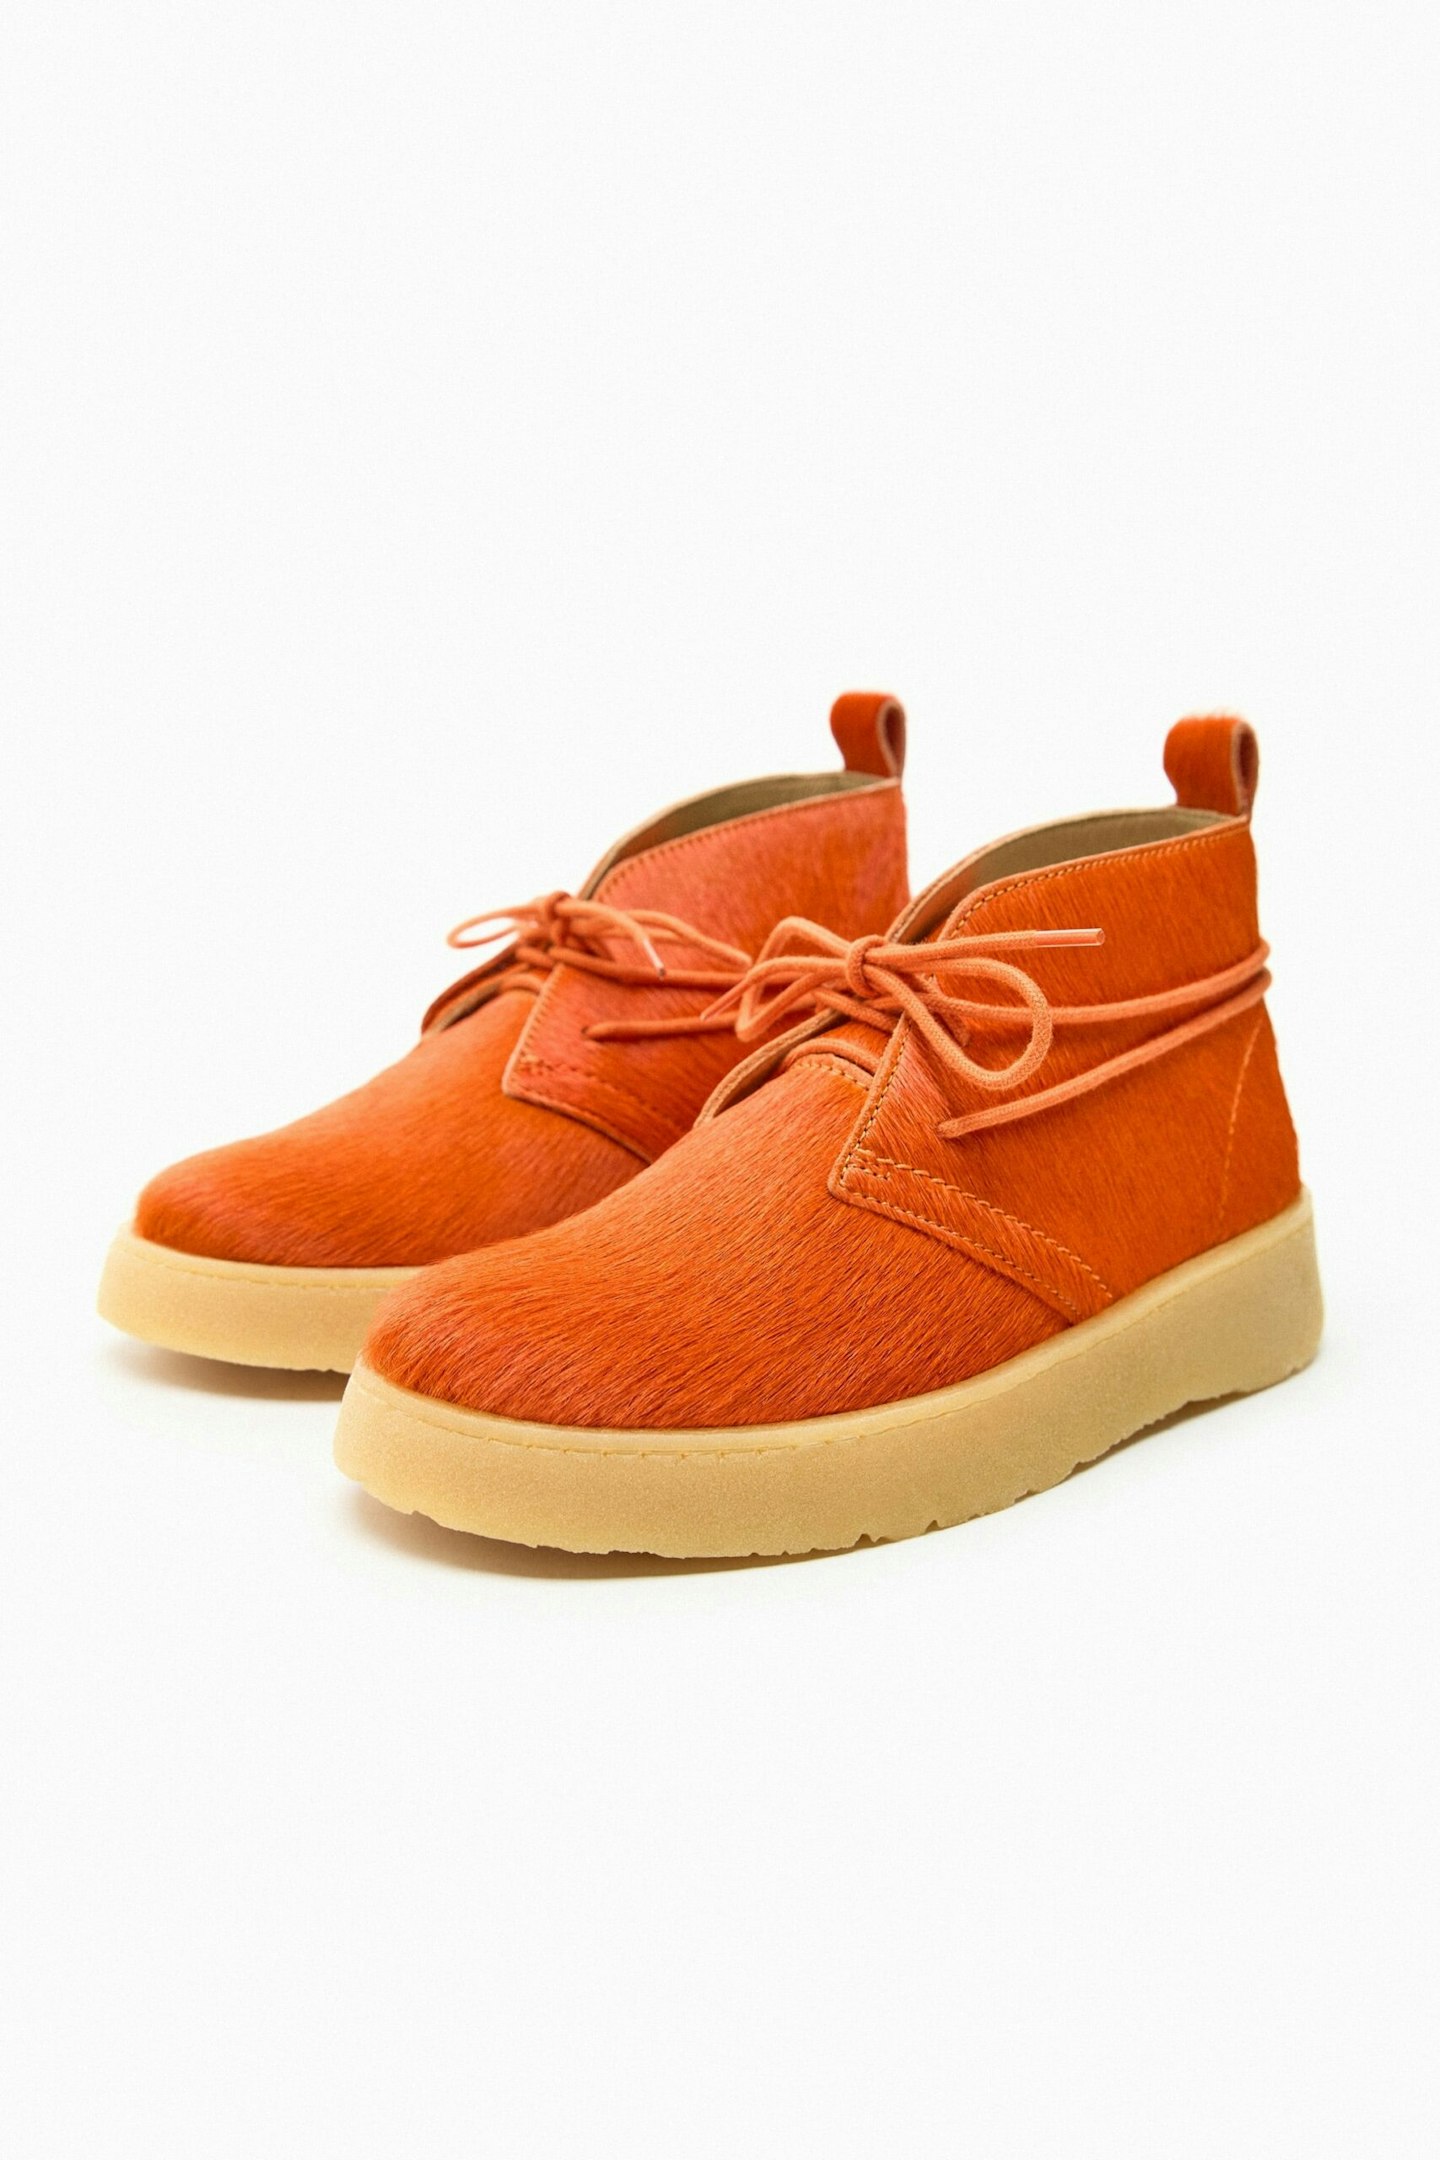 clarks-zara-orange-shoe